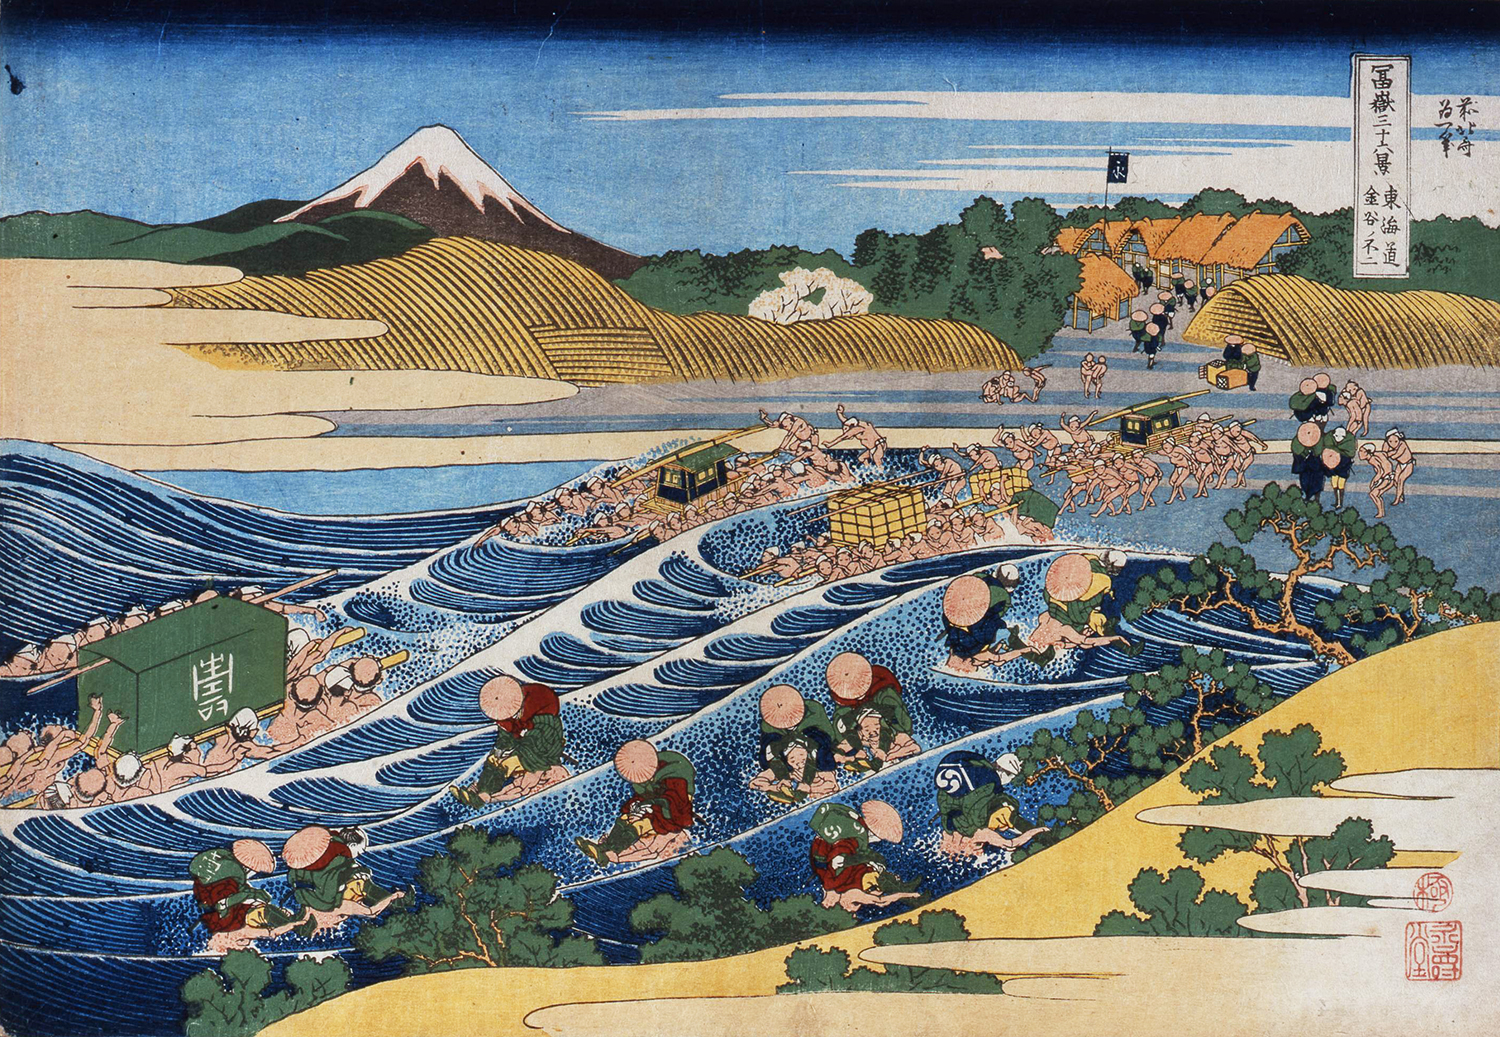 Katsushika Hokusai, Mount Fuji from Kanaya on the Tokaido Road, from the series Thirty-six Views of Mount Fuji, Sumida Hokusai Museum